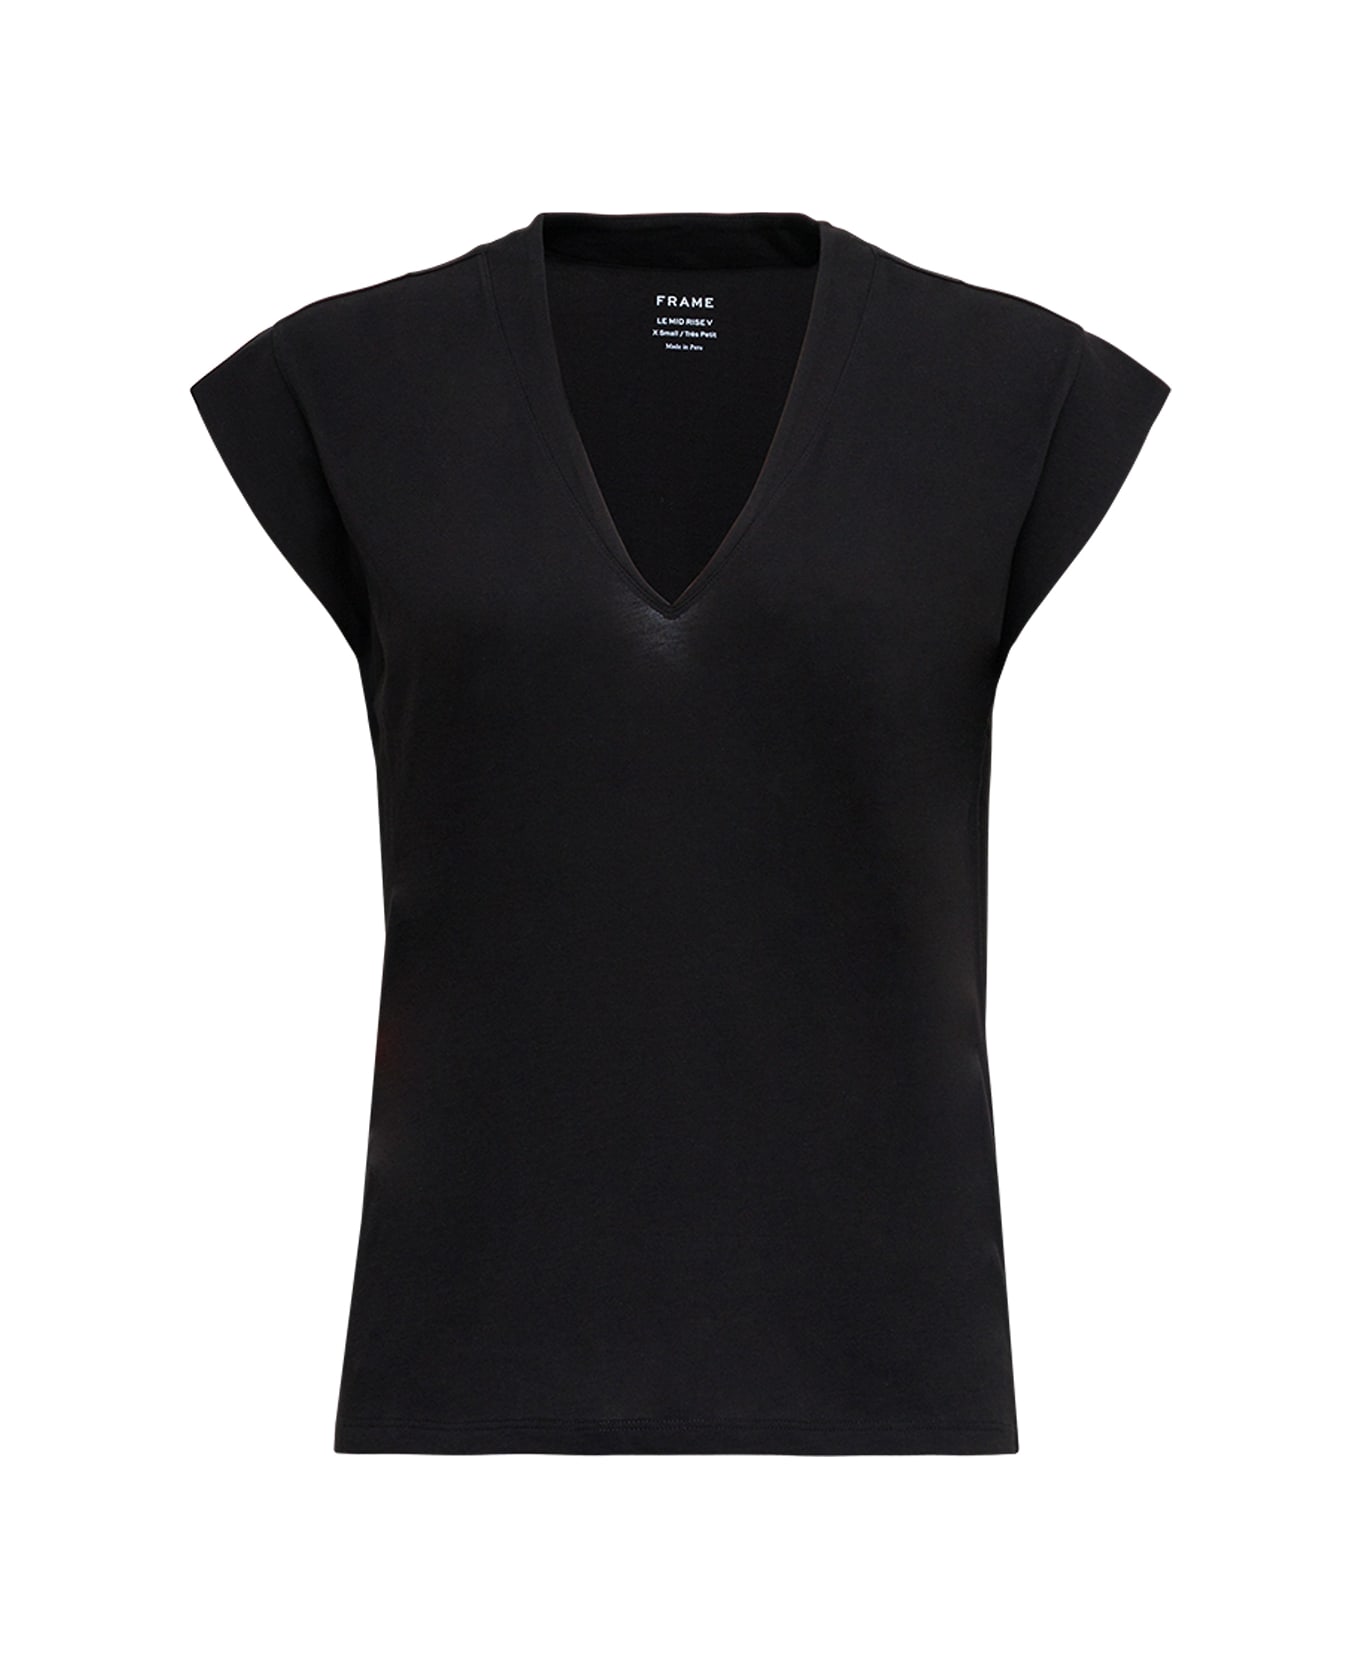 Frame Black Cotton V-neck T-shirt - NOIR